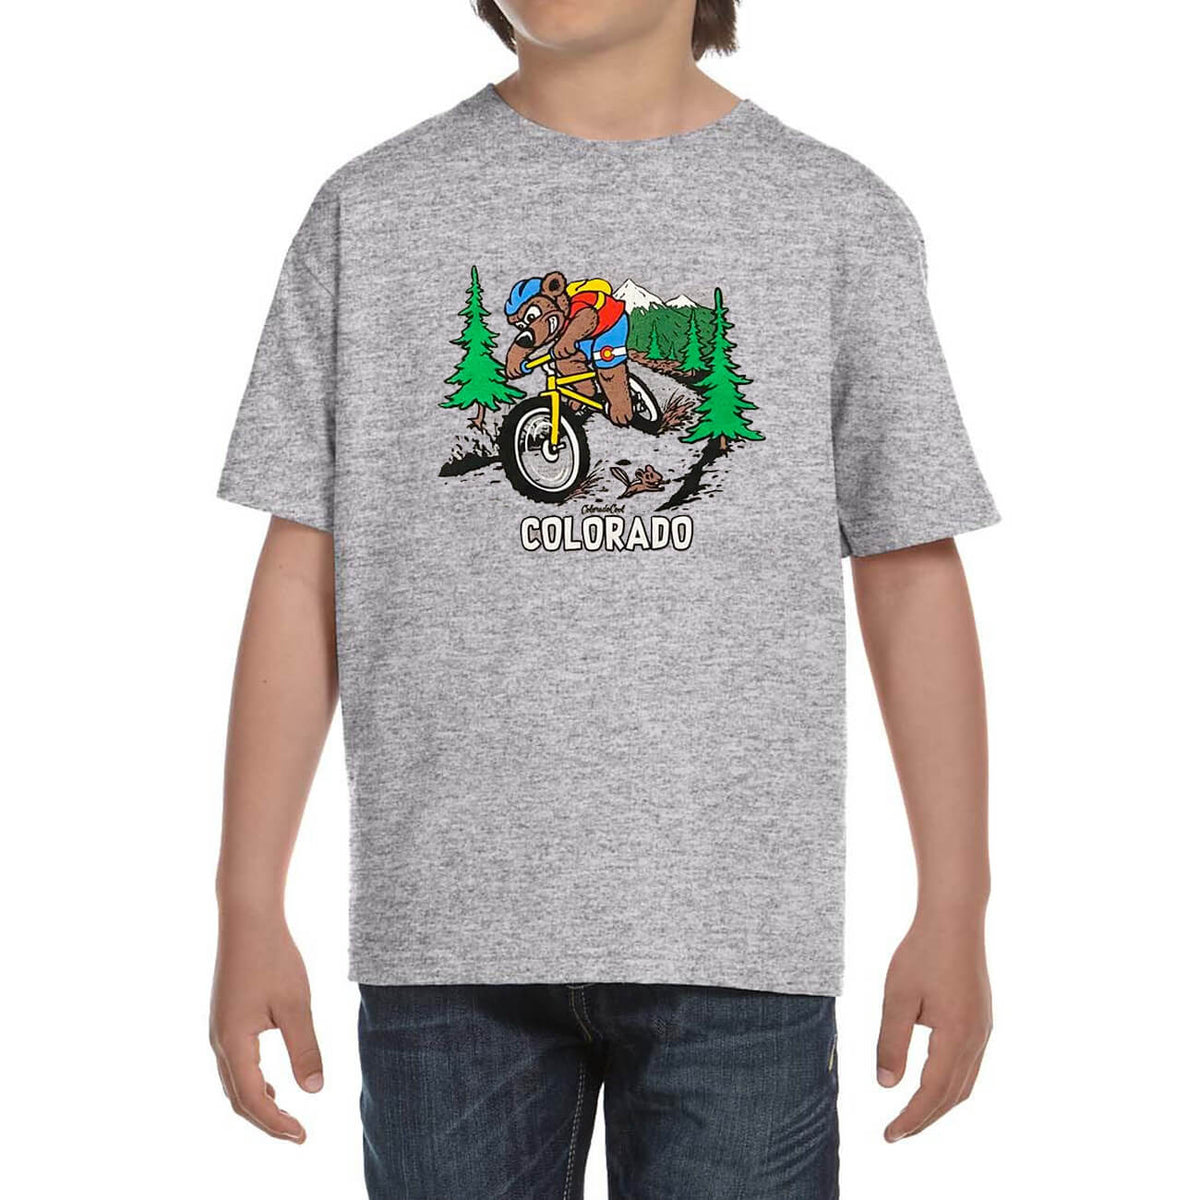 Colorado Kids Shirt with Bear